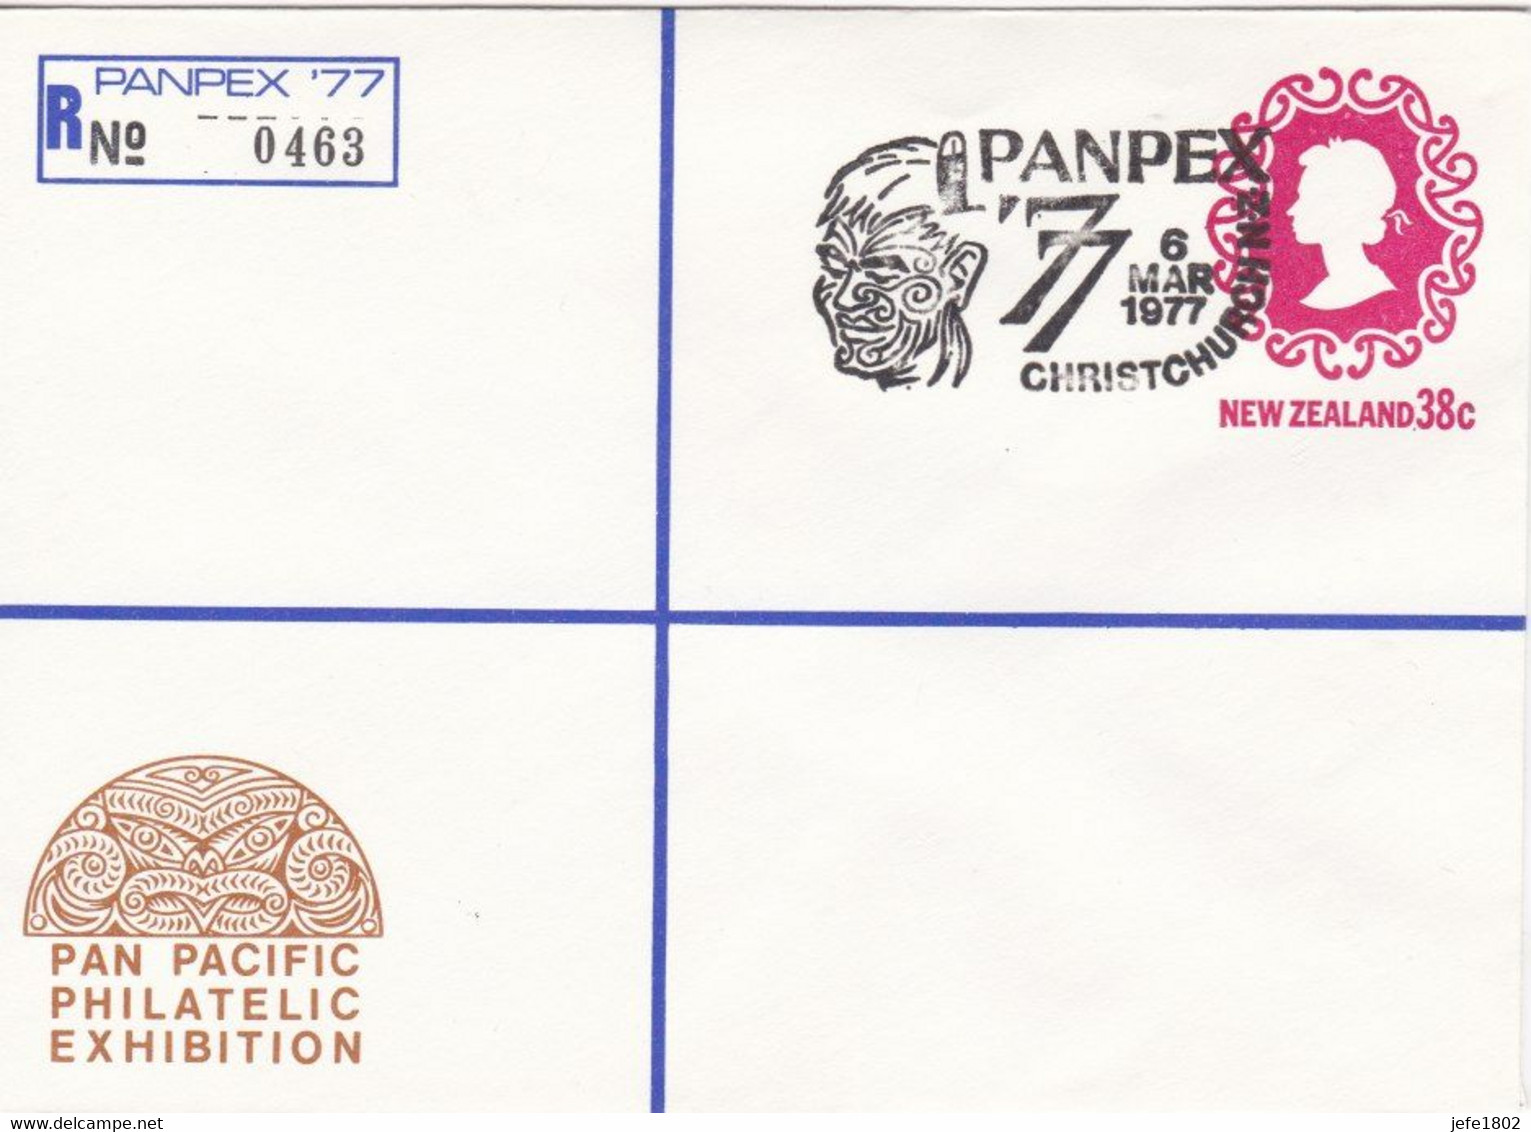 Registered Letter PANPEX '77 - N° 0463 - Tattooed Maori Head - 6 Mar 1977 - Ganzsachen